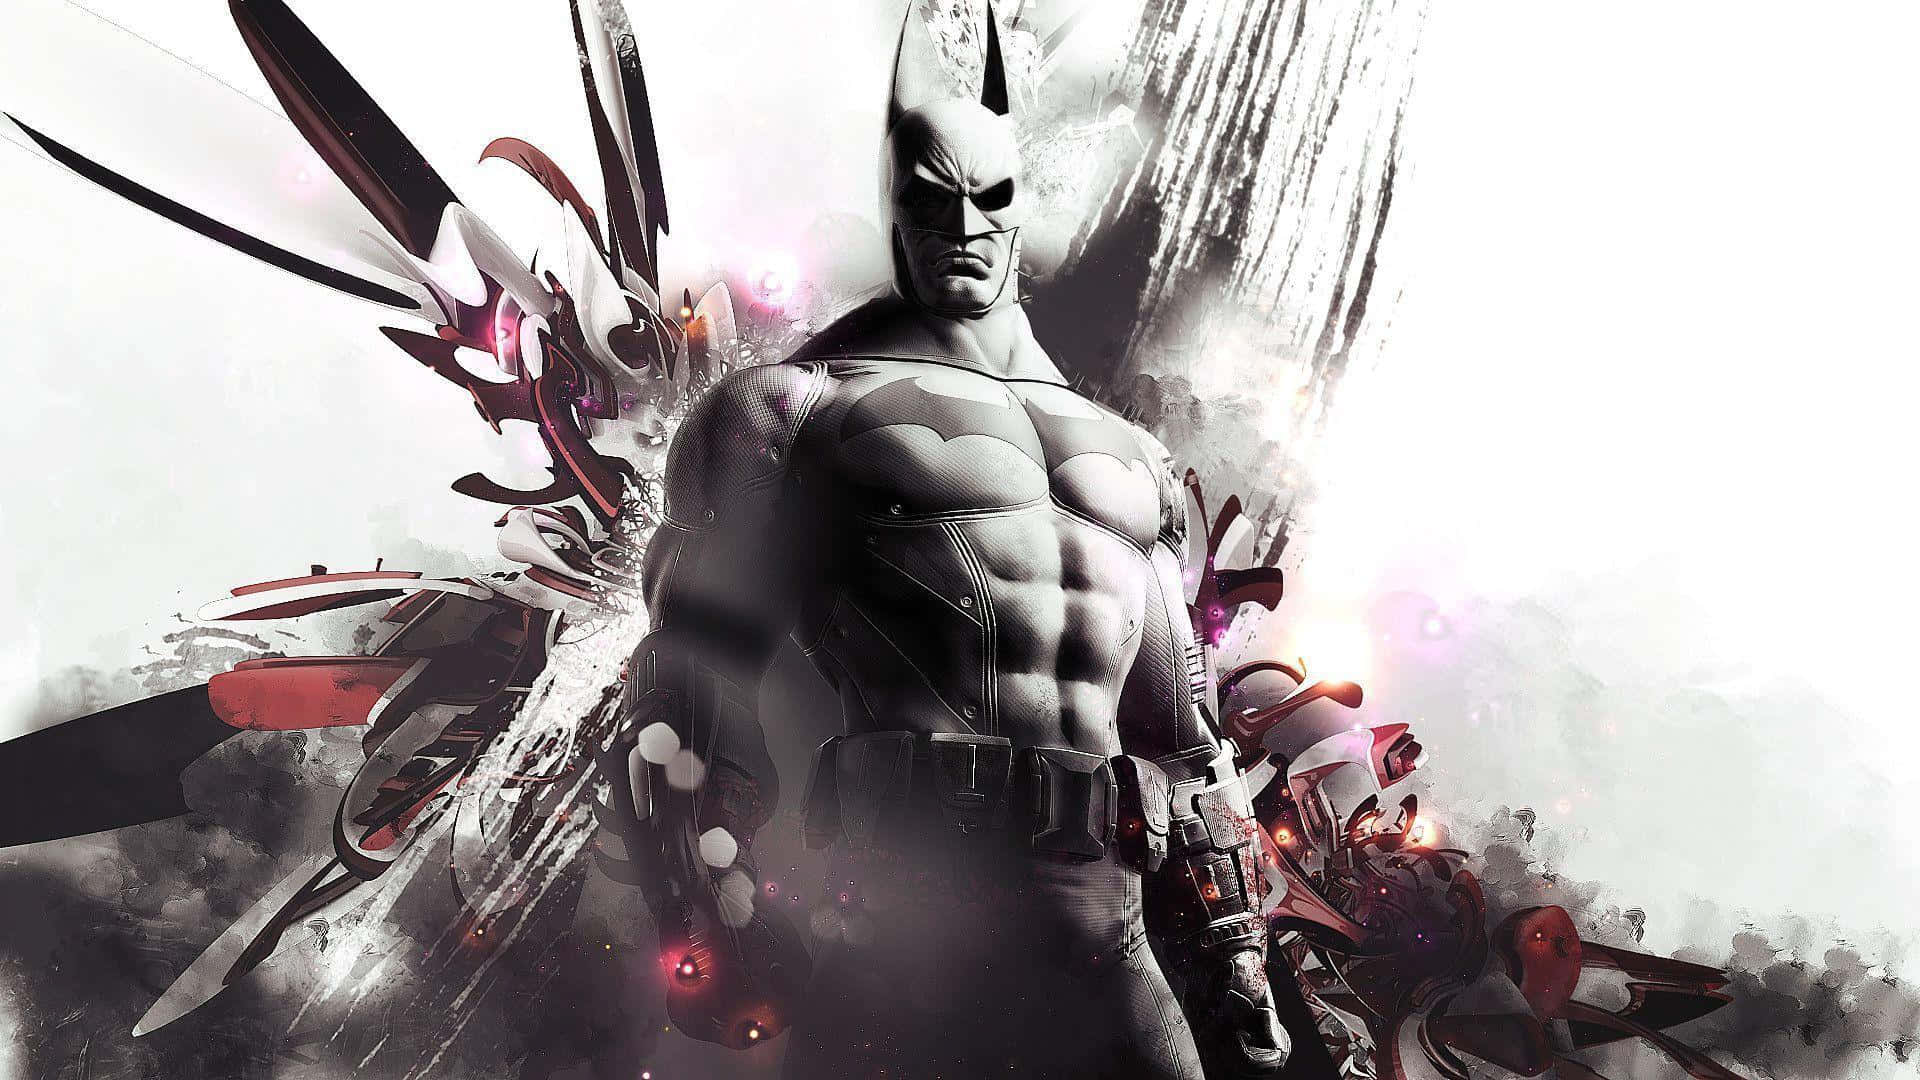 The Dark Knight Returns in Batman Arkham City